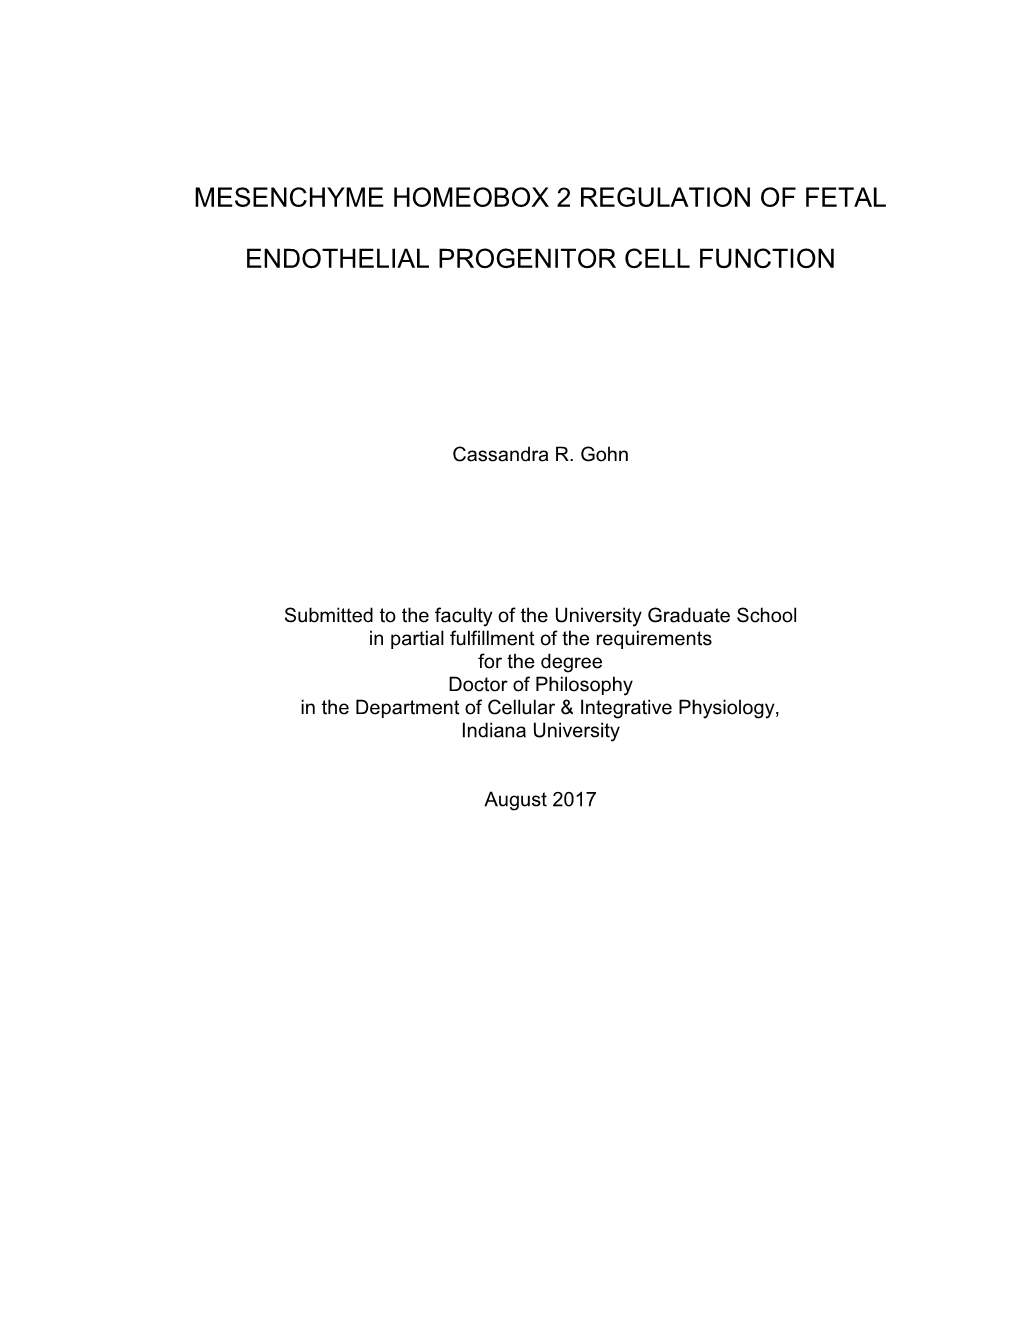 Mesenchyme Homeobox 2 Regulation of Fetal Endothelial Progenitor Cell